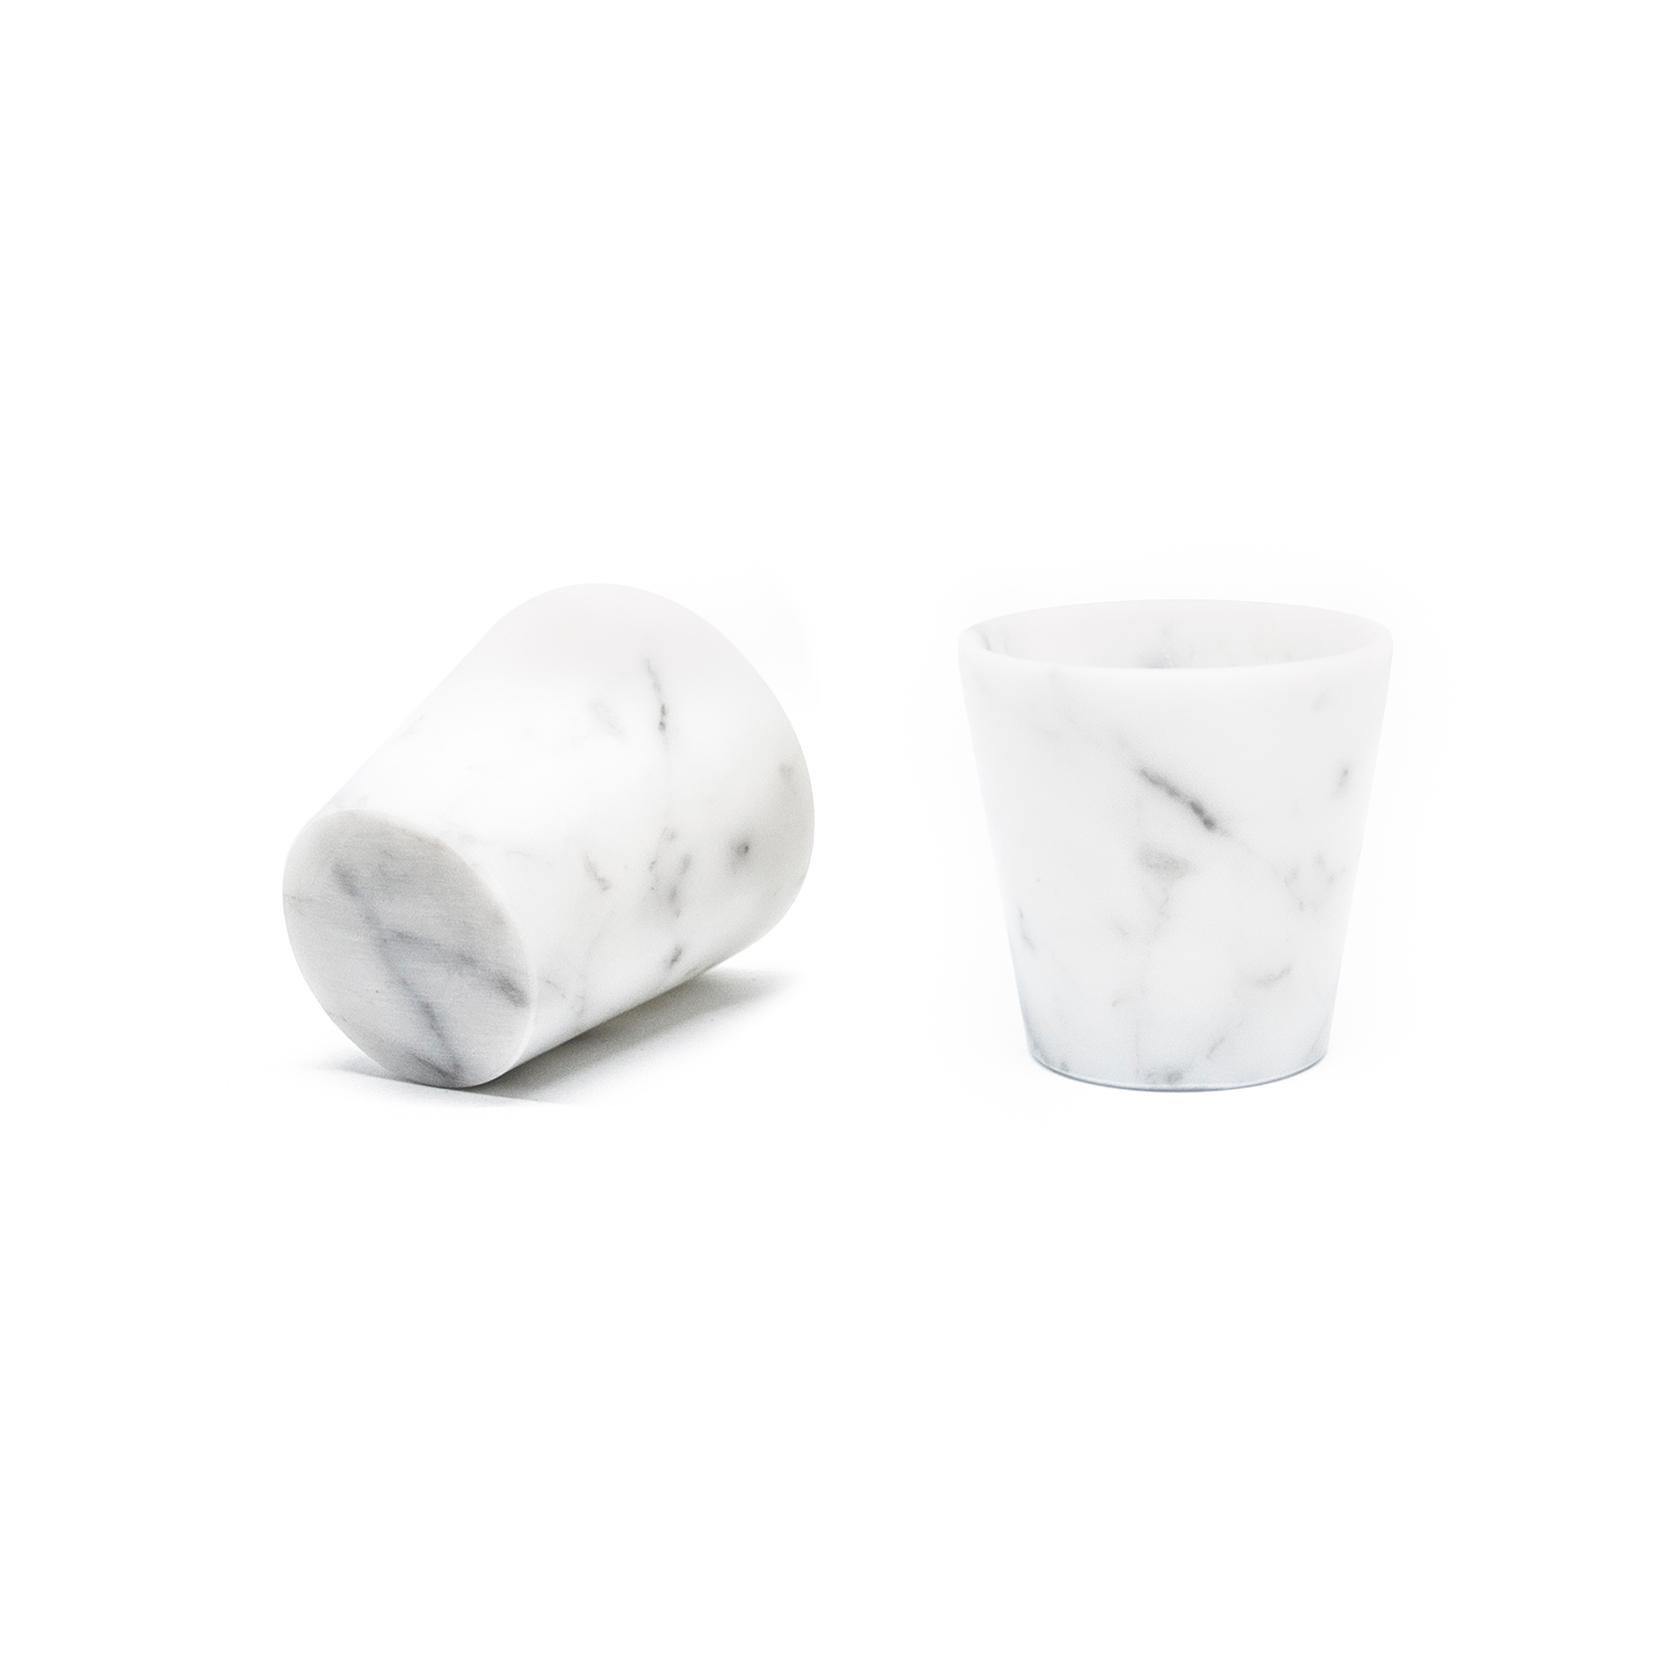 Grappa Glass in White Carrara Marble 1